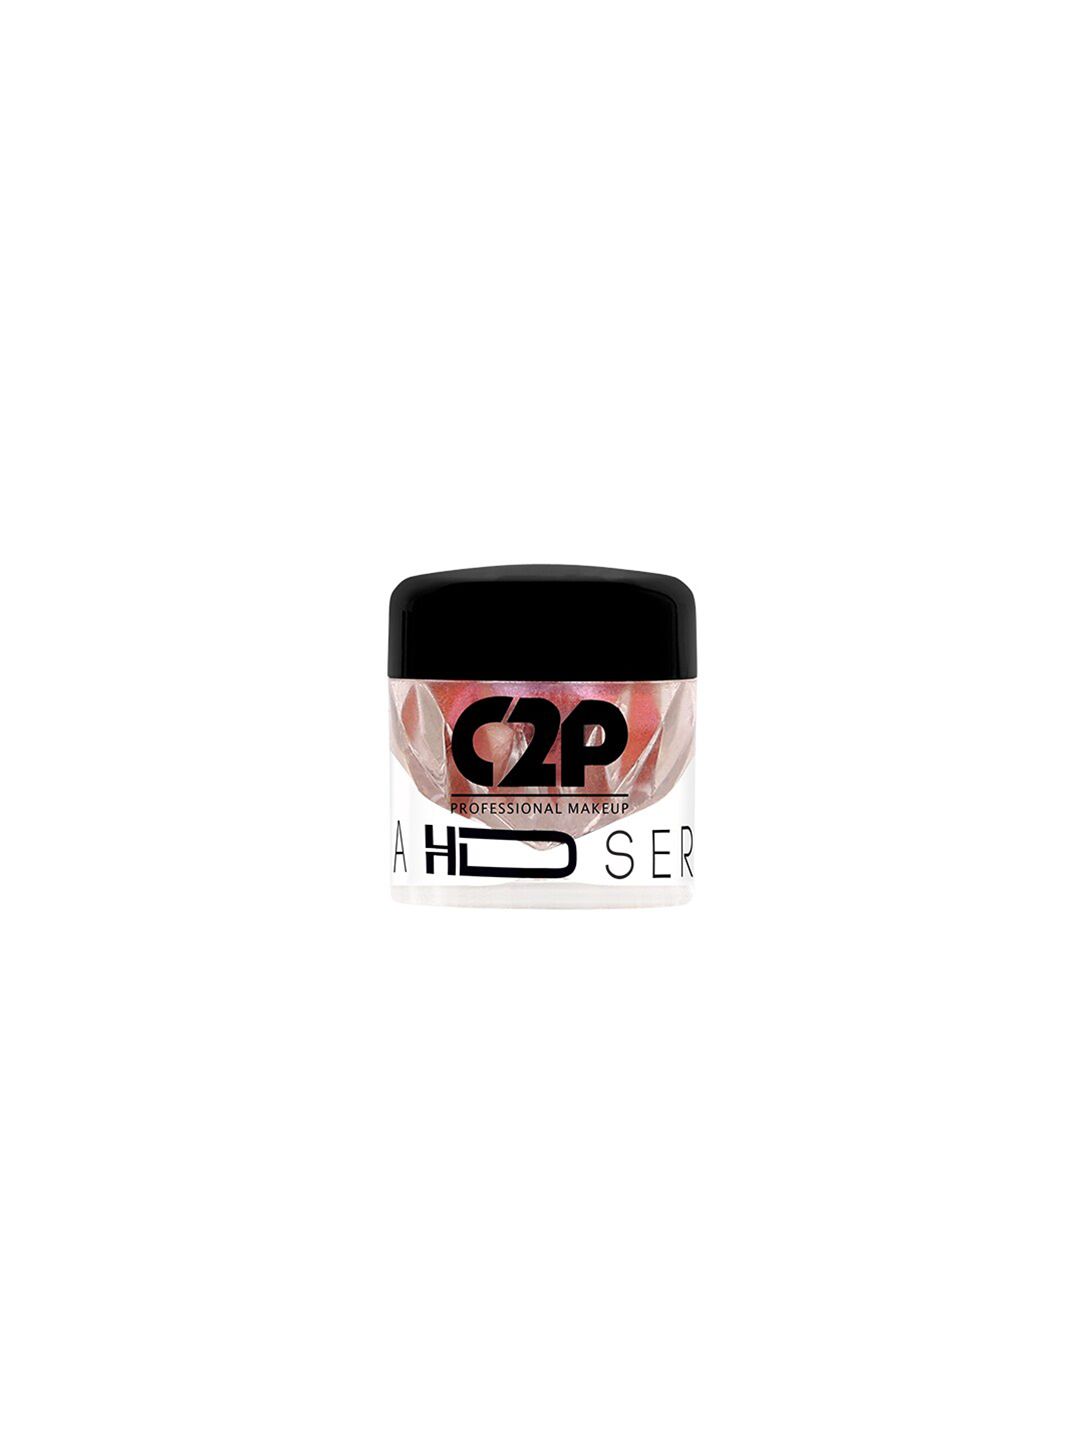 C2P PROFESSIONAL MAKEUP HD Loose Precious Pigments Eyeshadow - Wild Maroon 403 Price in India